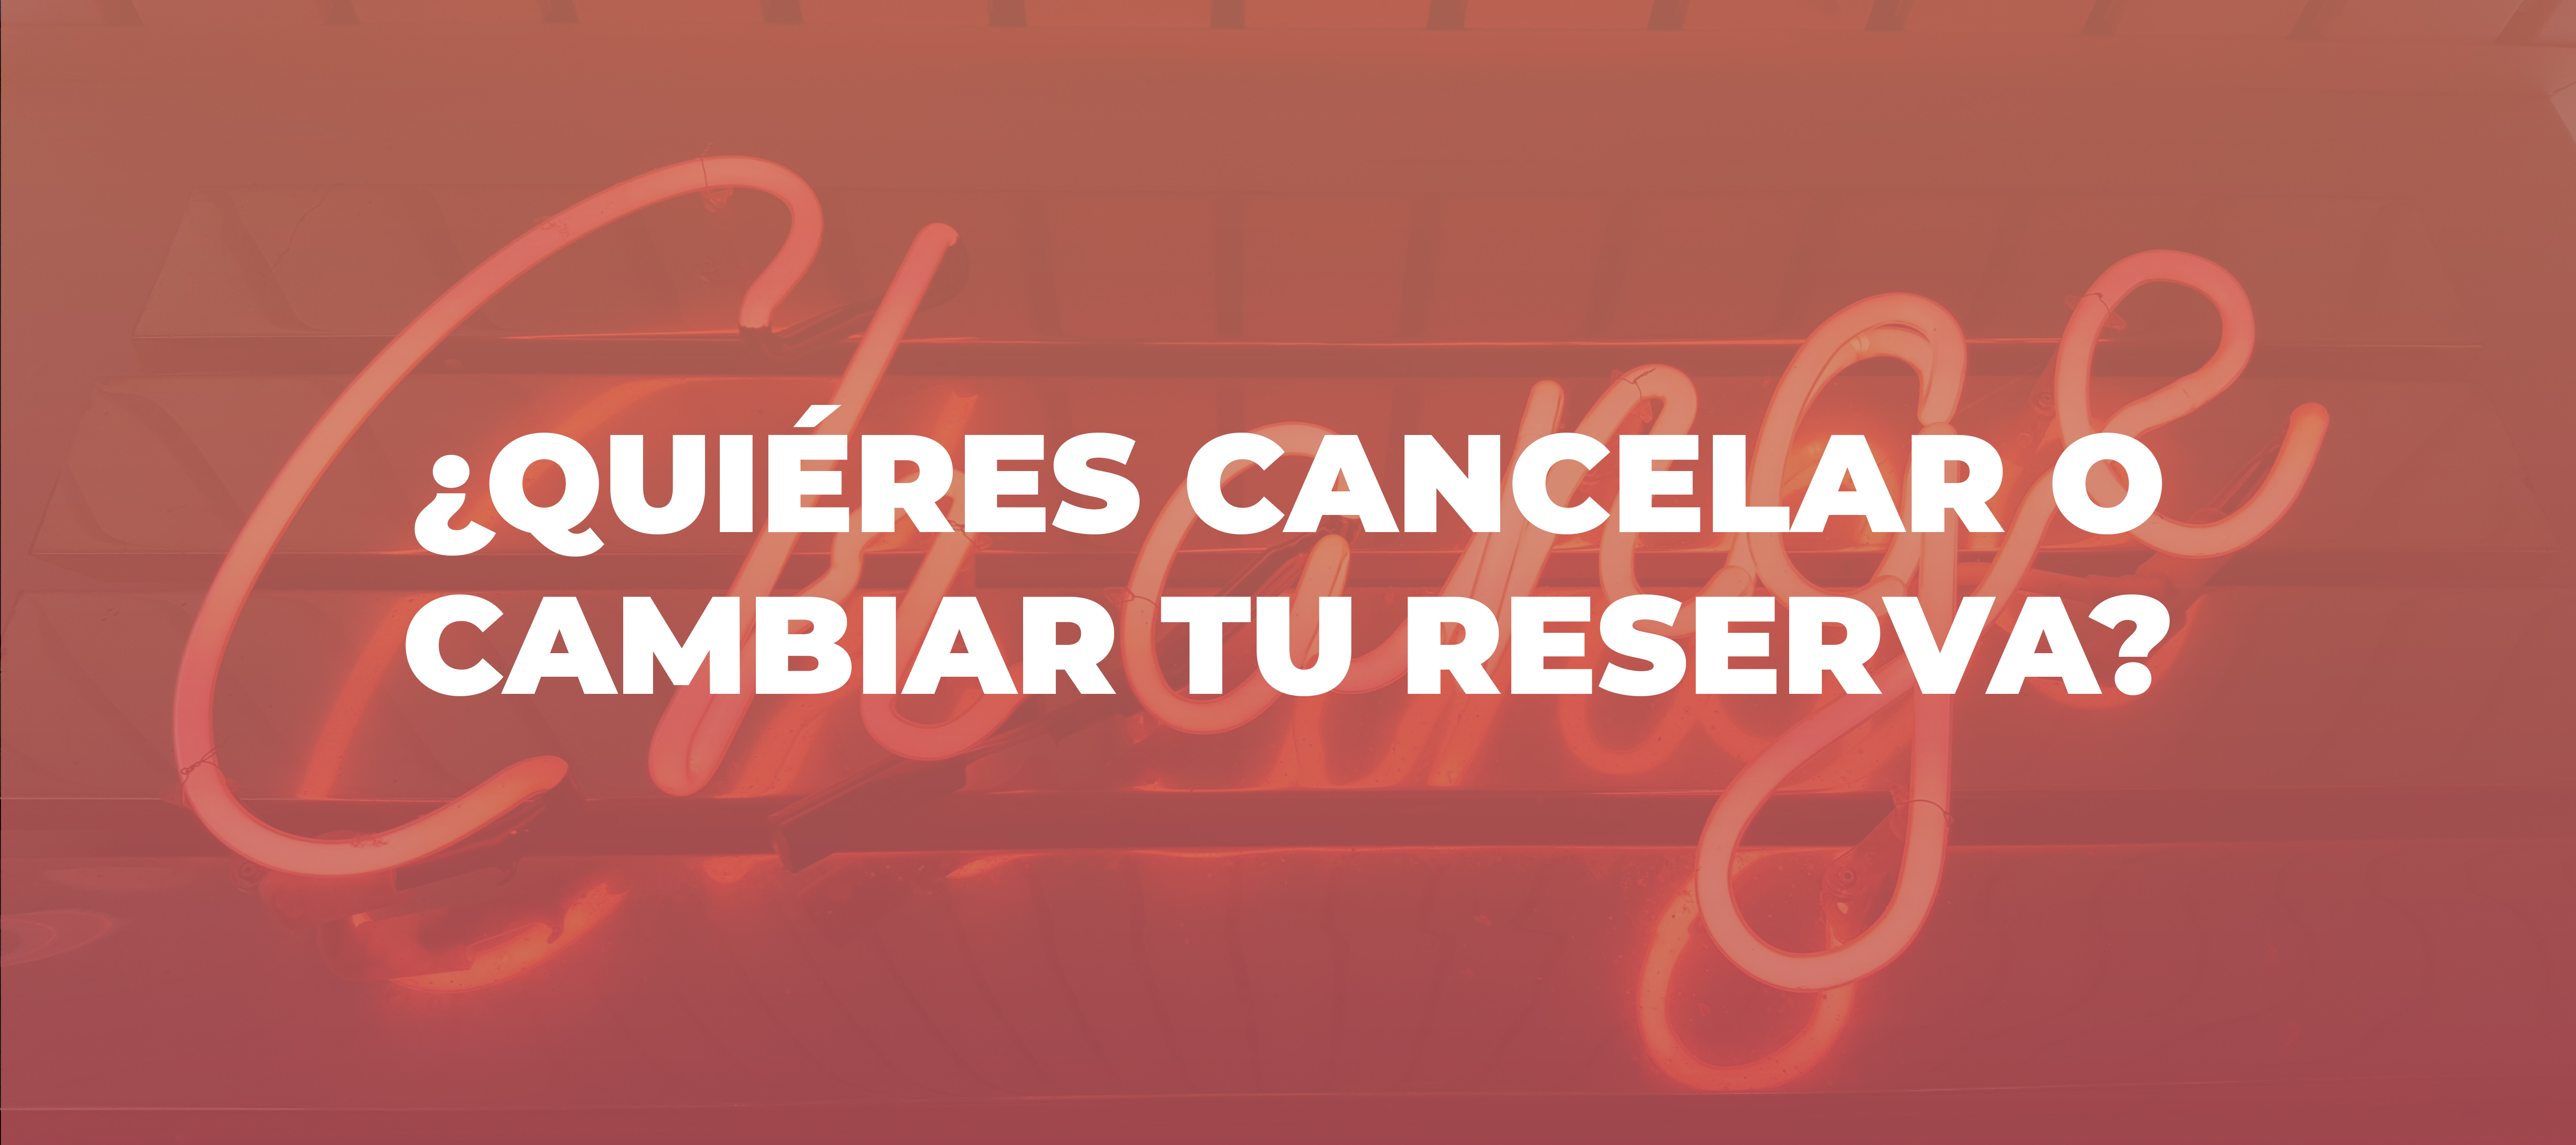 Cancelar_o_cambiar_la_reserva.jpg